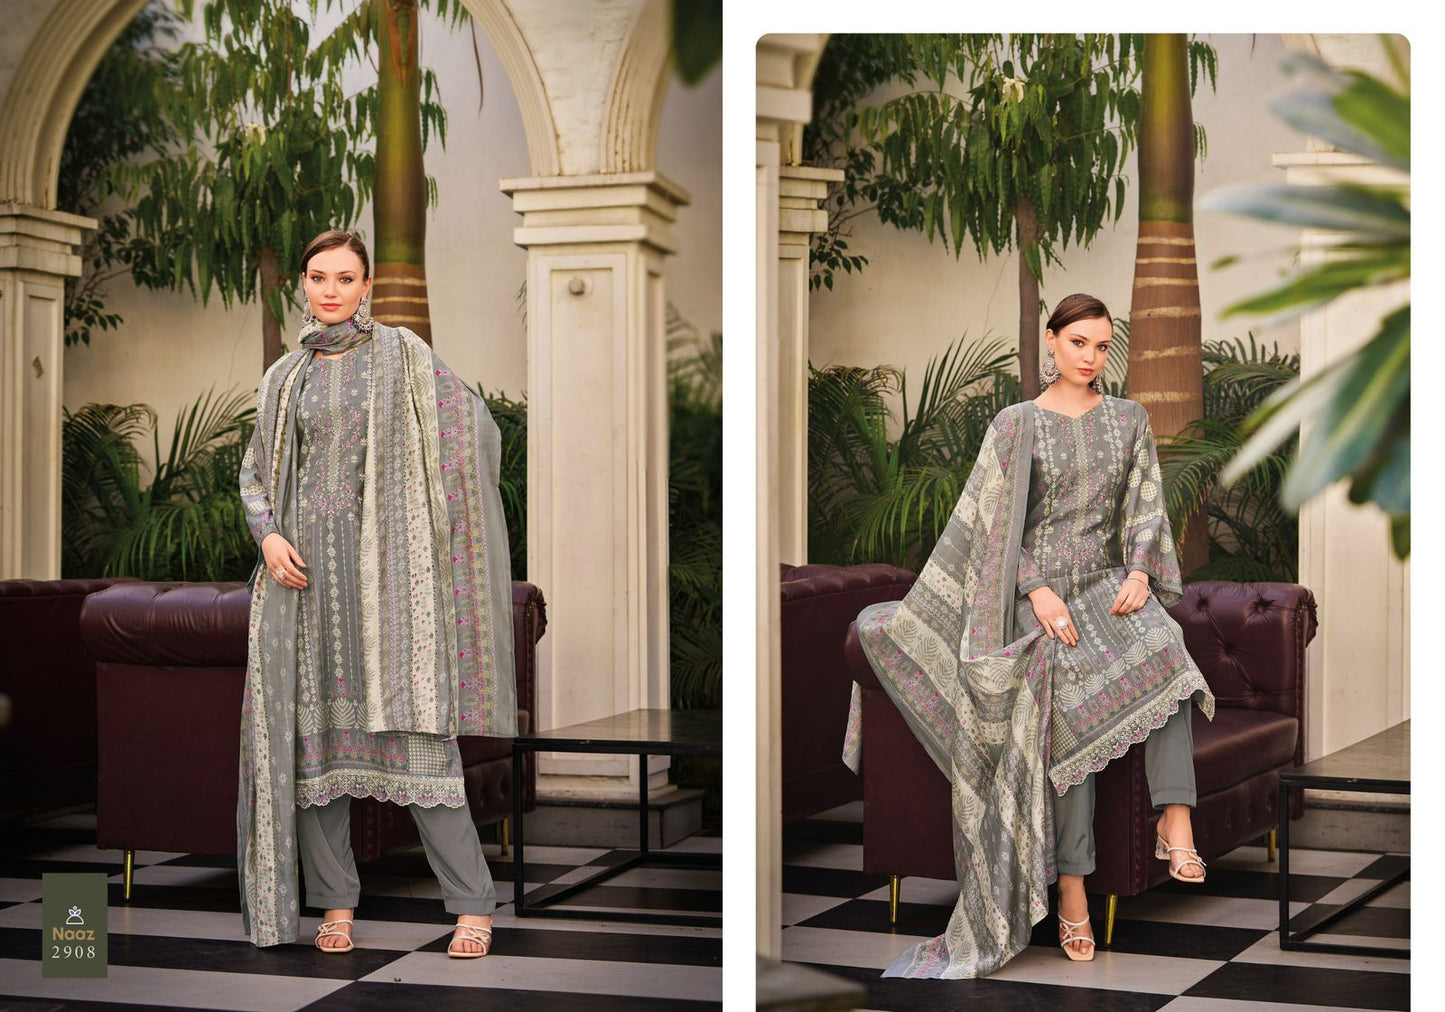 Naaz Vol 29 Pakiza Prints Modal Silk Karachi Salwar Suits